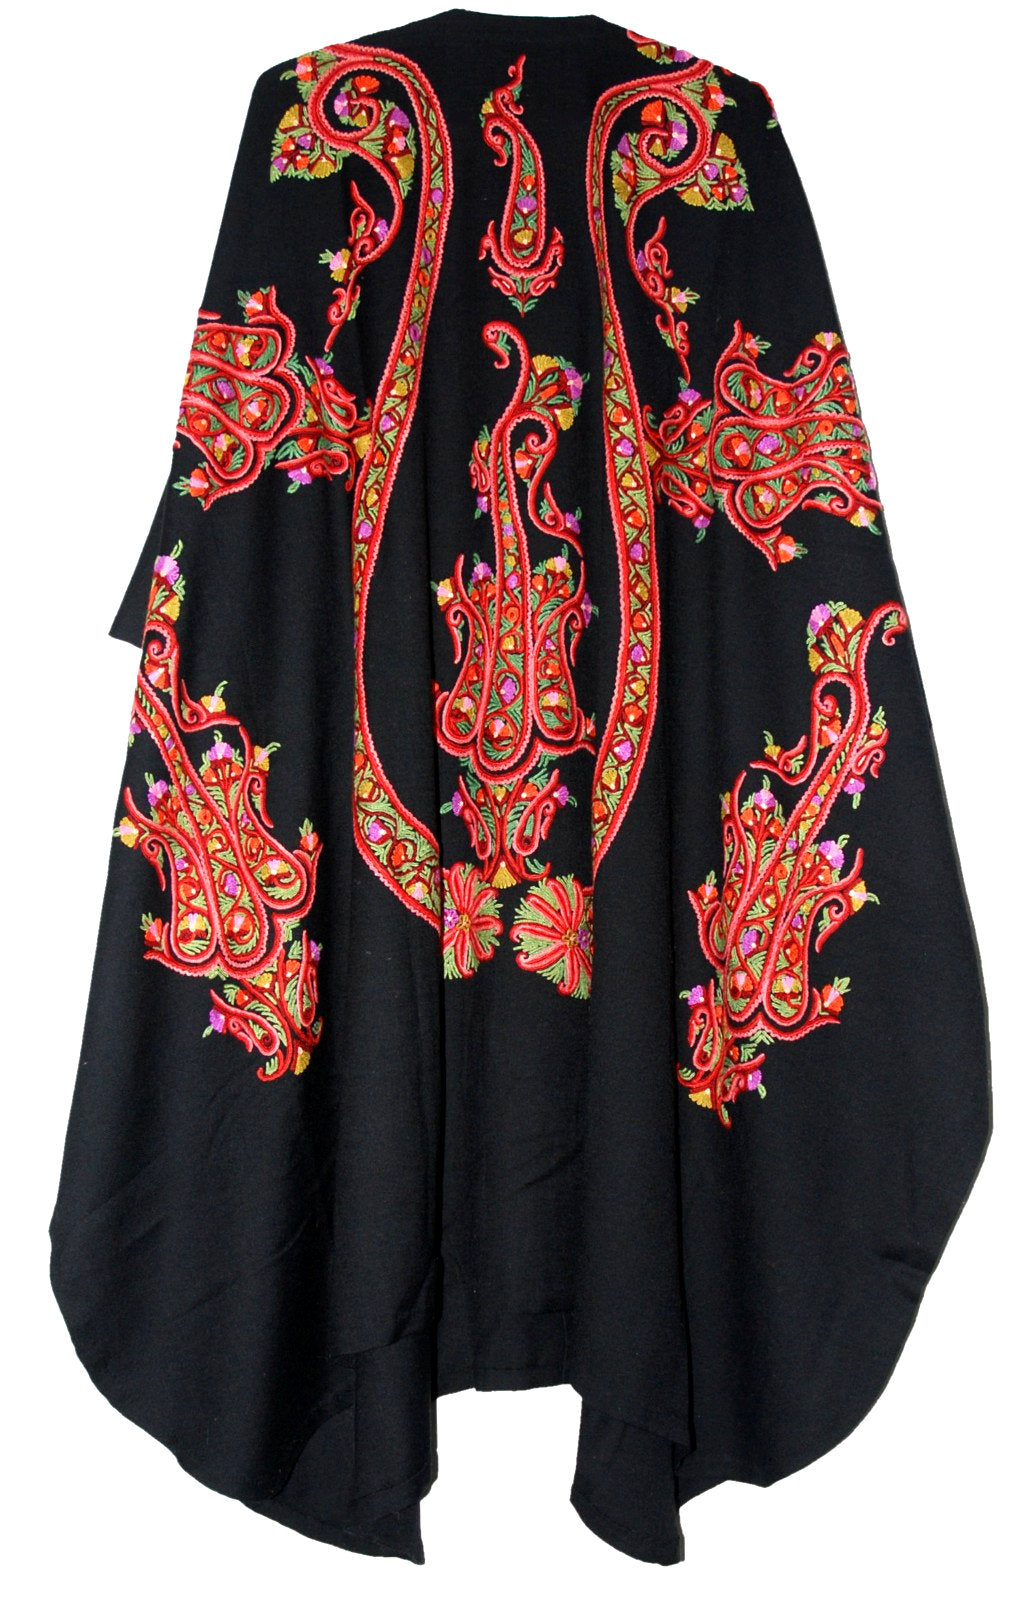 Woolen Coat Shrug Black, Multicolor Embroidery #AO-163